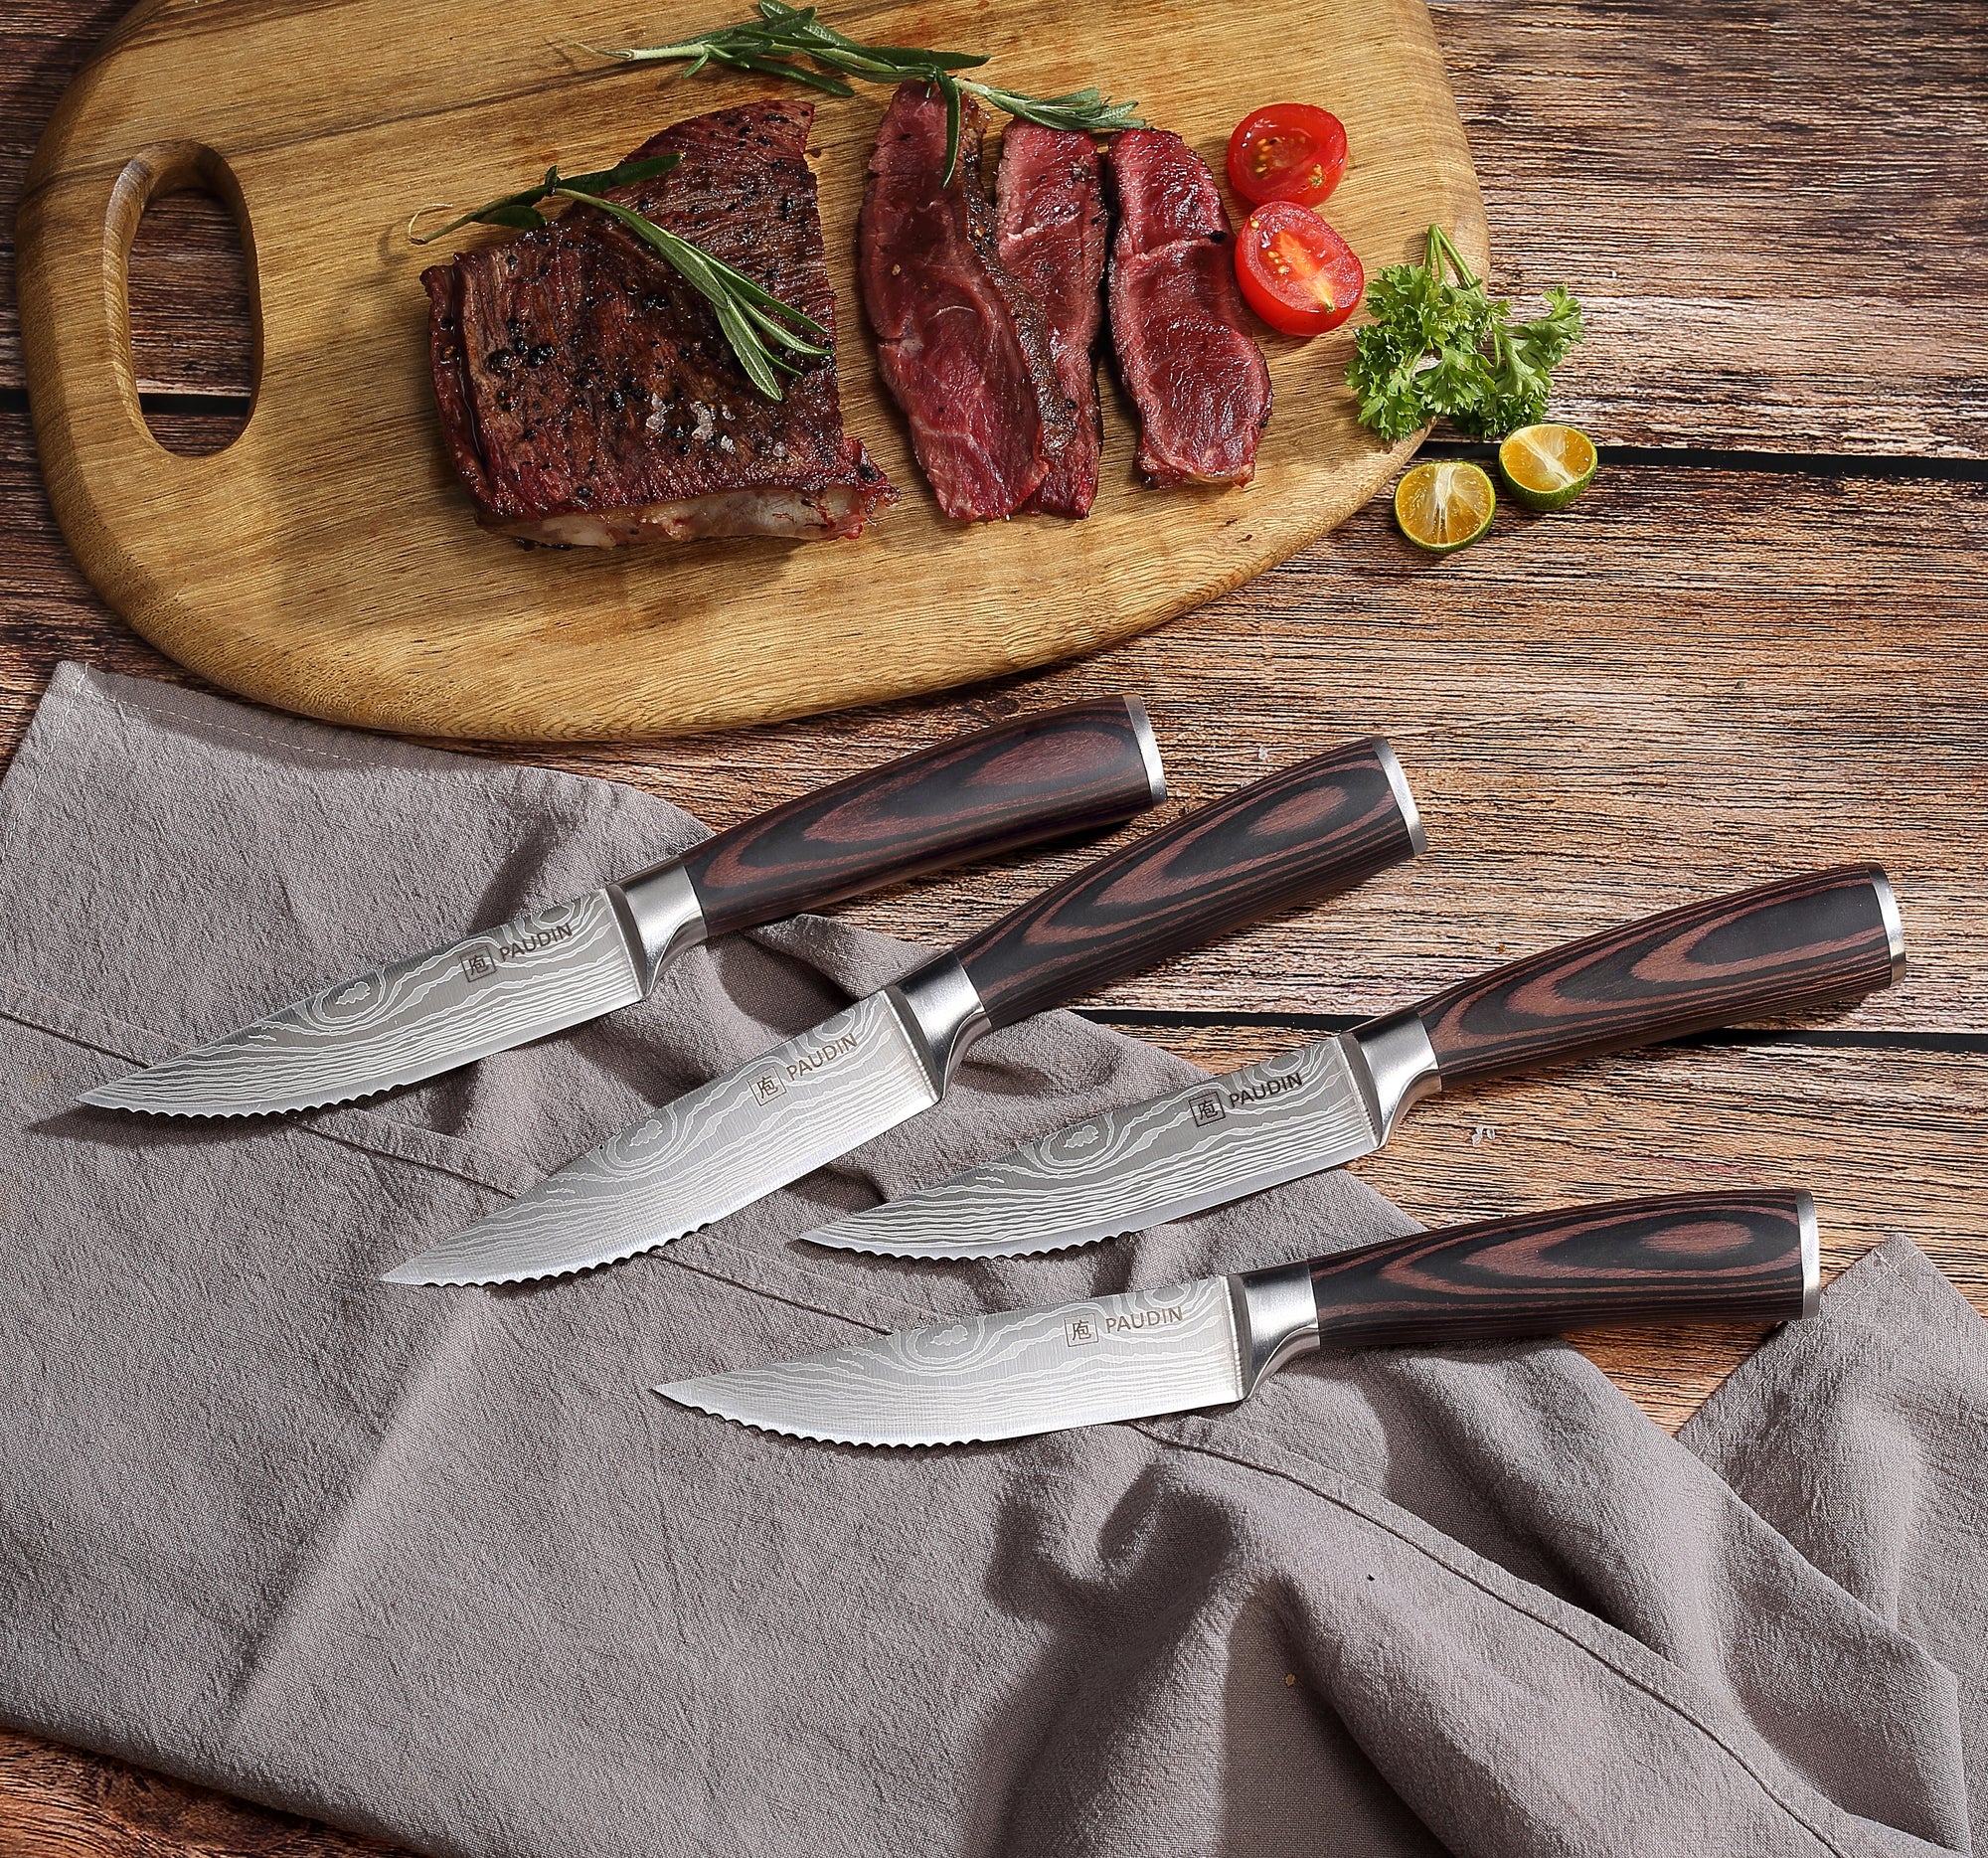 Universal Steak Knives Set Of 4 - Paudin